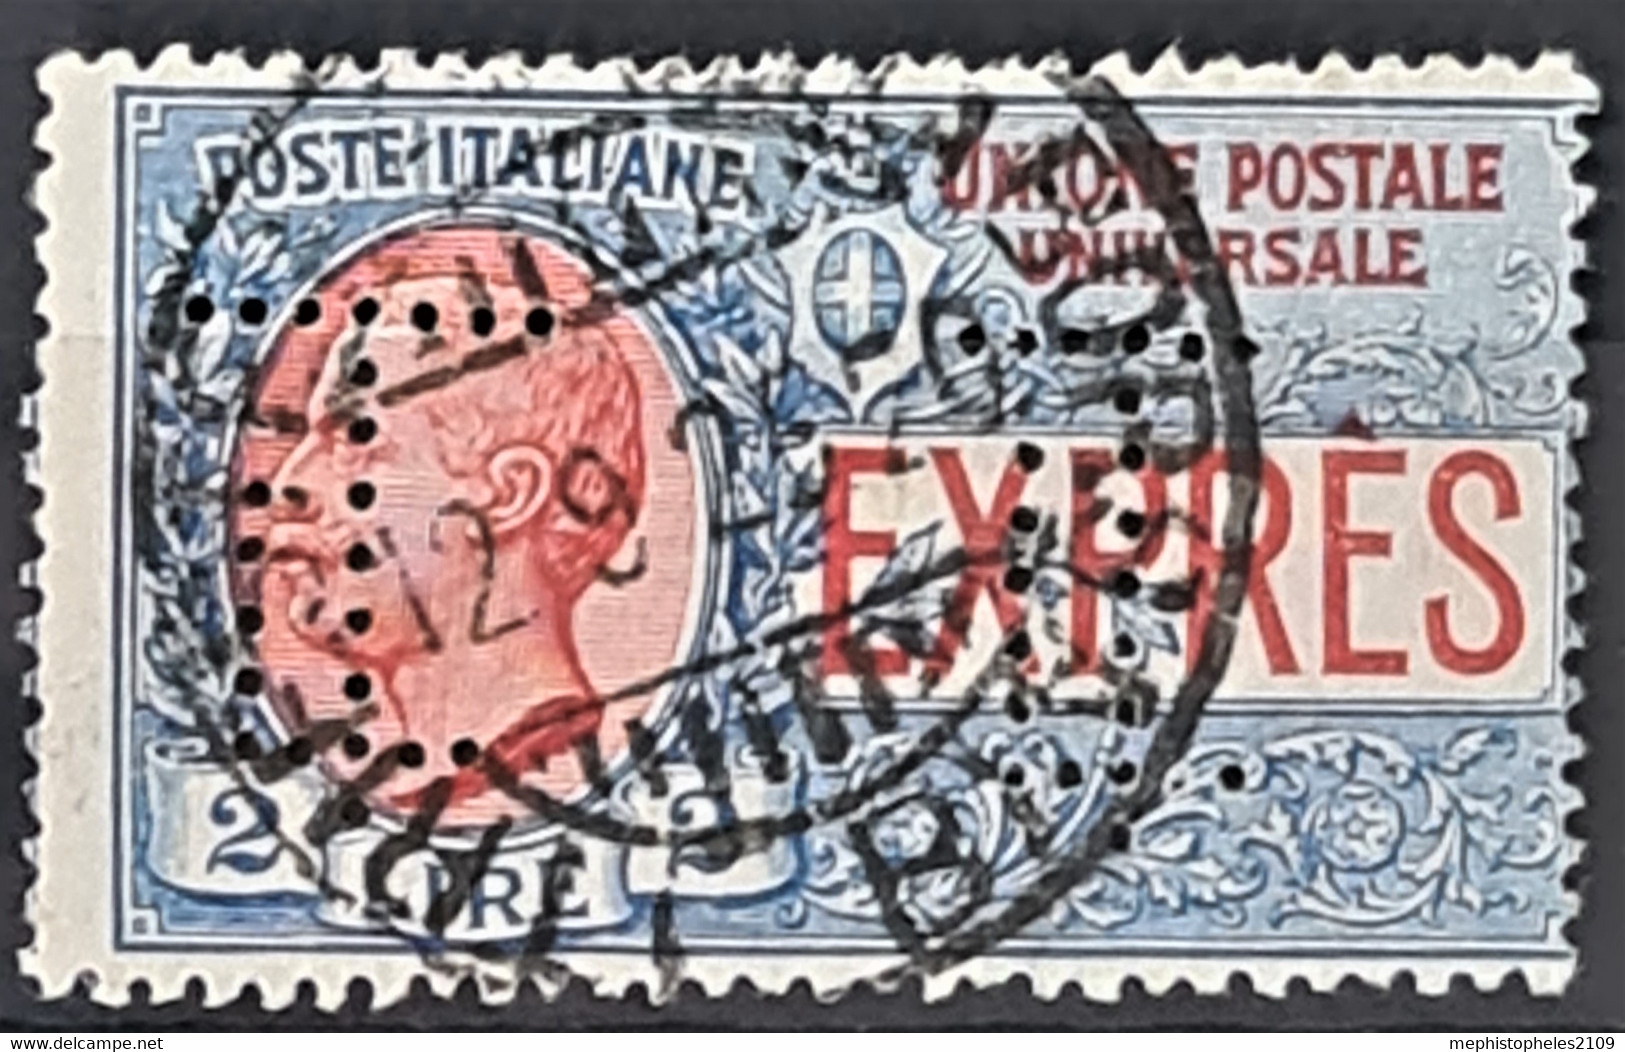 ITALY / ITALIA 1925 - Canceled - Sc# E7 - Express Mail 2L - Posta Espresso